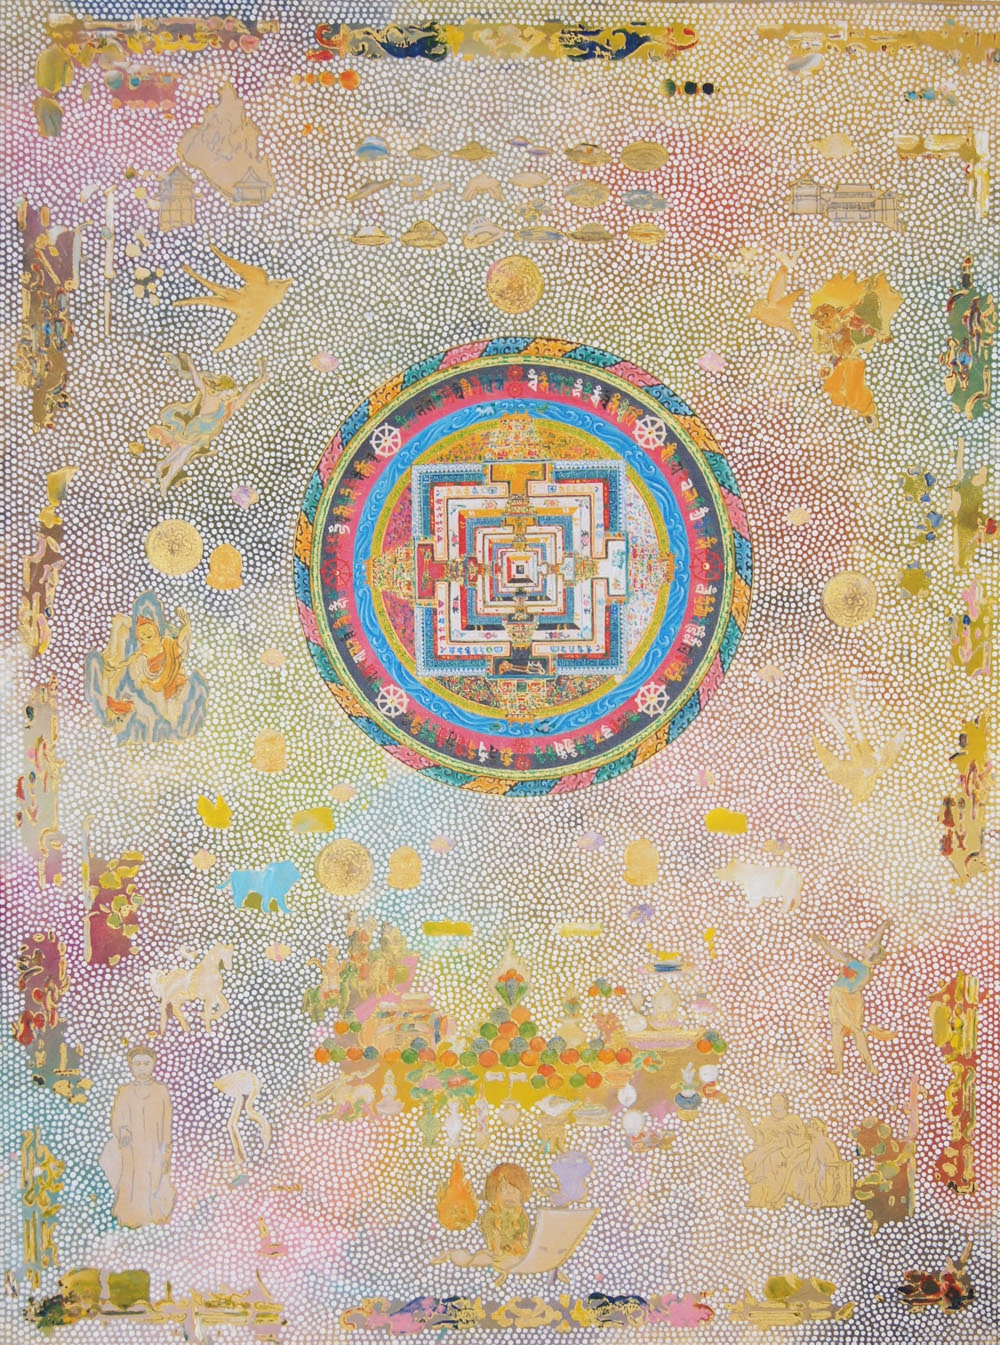 'Kalachakra Mandala (with Karma Phuntsok)’, 2004, acrylic on linen, 122 x 91 cm